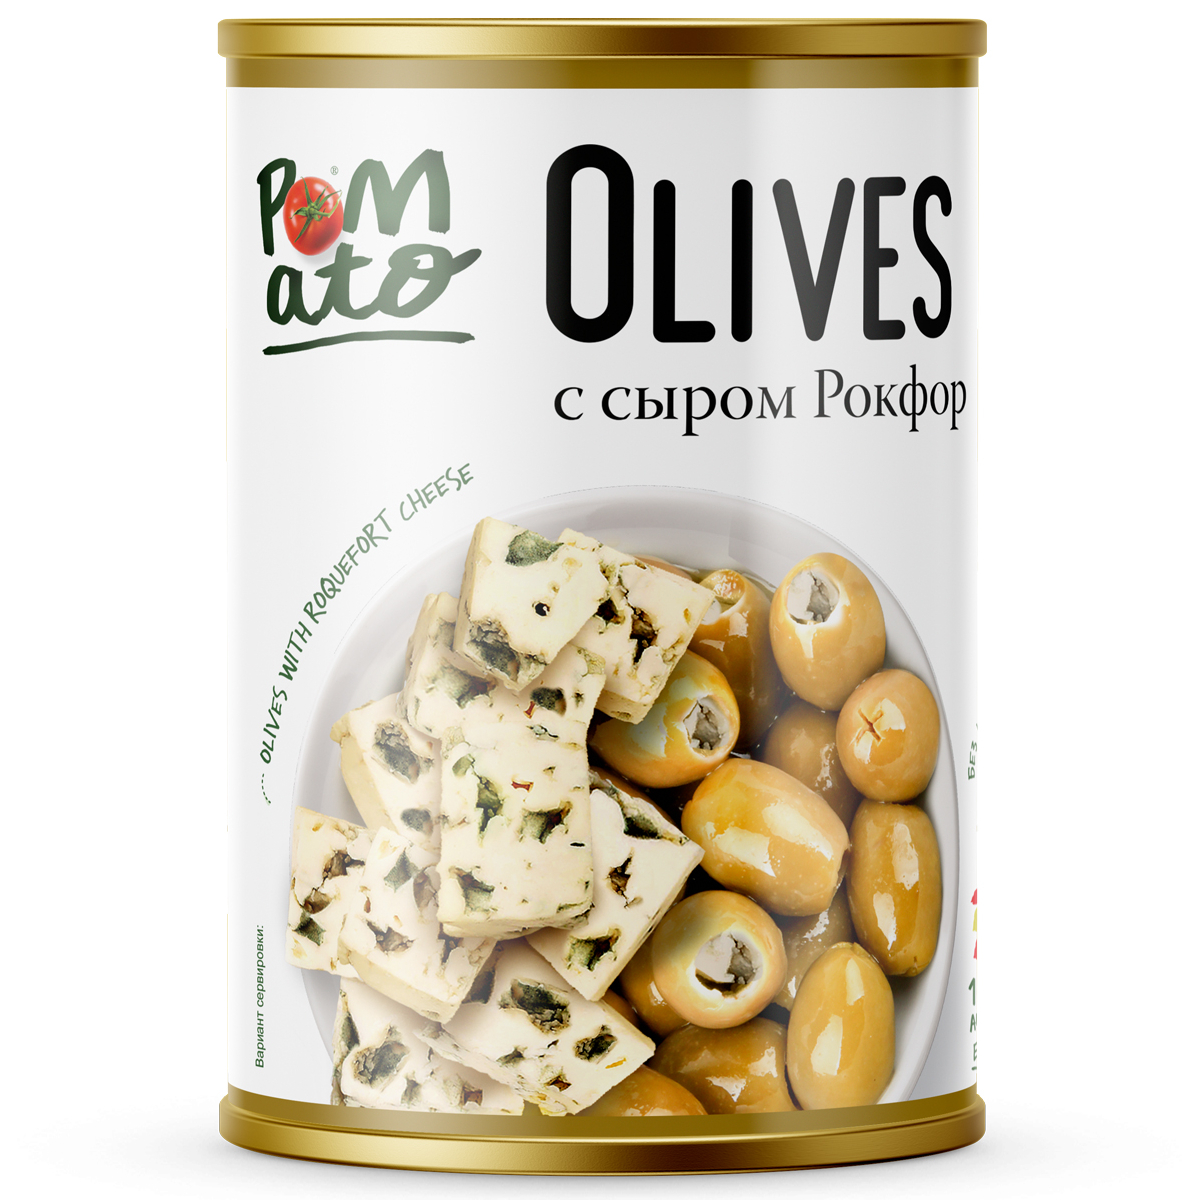 Оливки Pomato с сыром рокфор, 300 г оливки iberica с голубым сыром 300 г